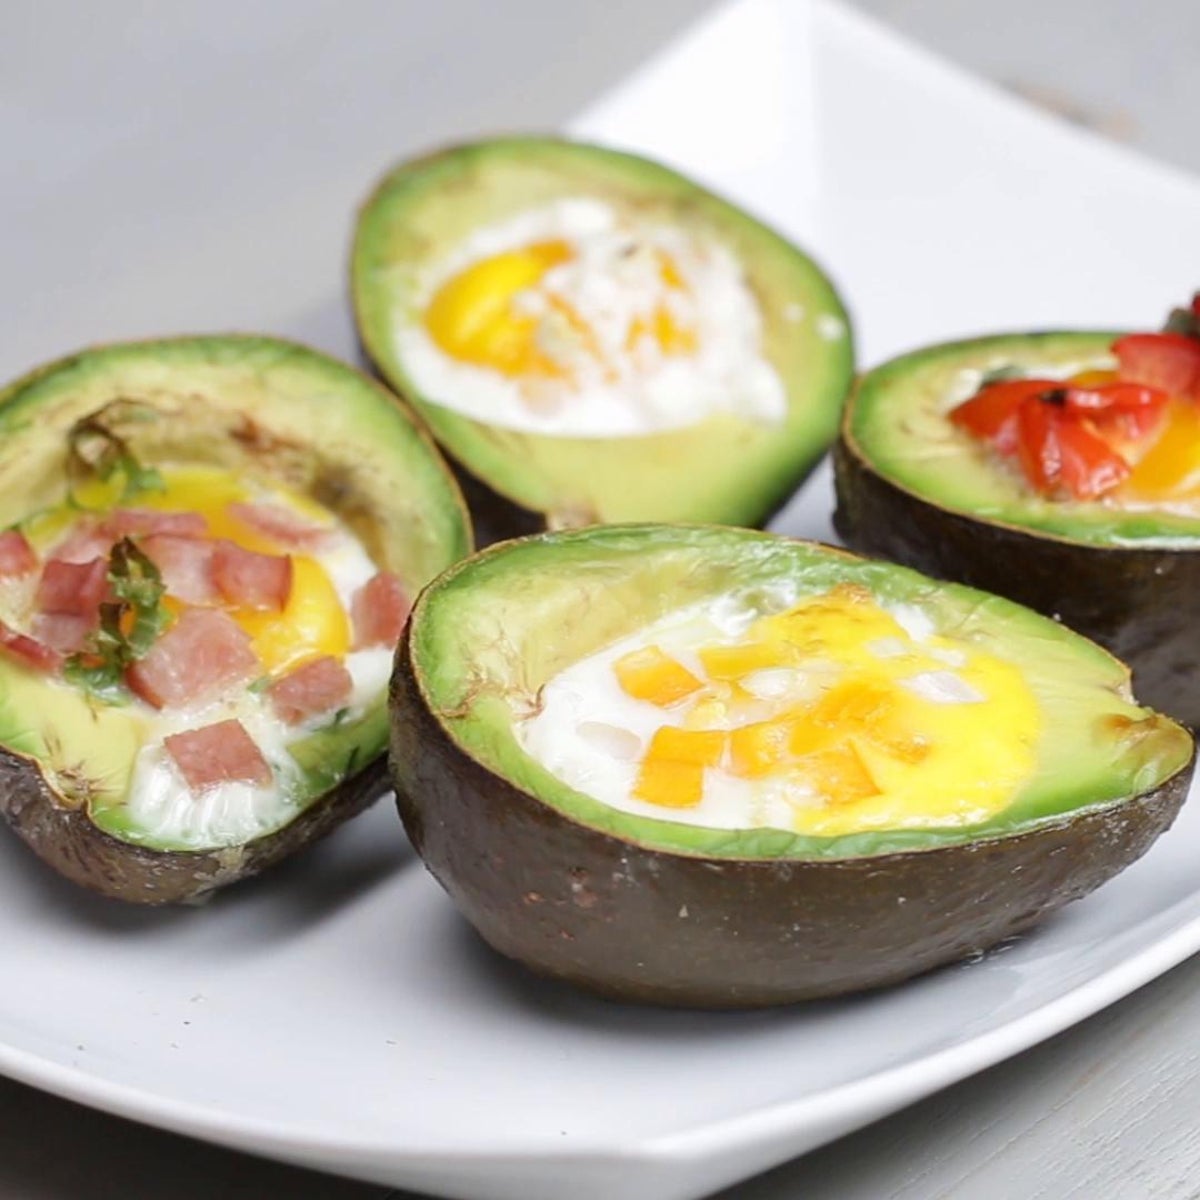 Super Healthy Breakfast Avocado Egg Cups for Clean Eats!